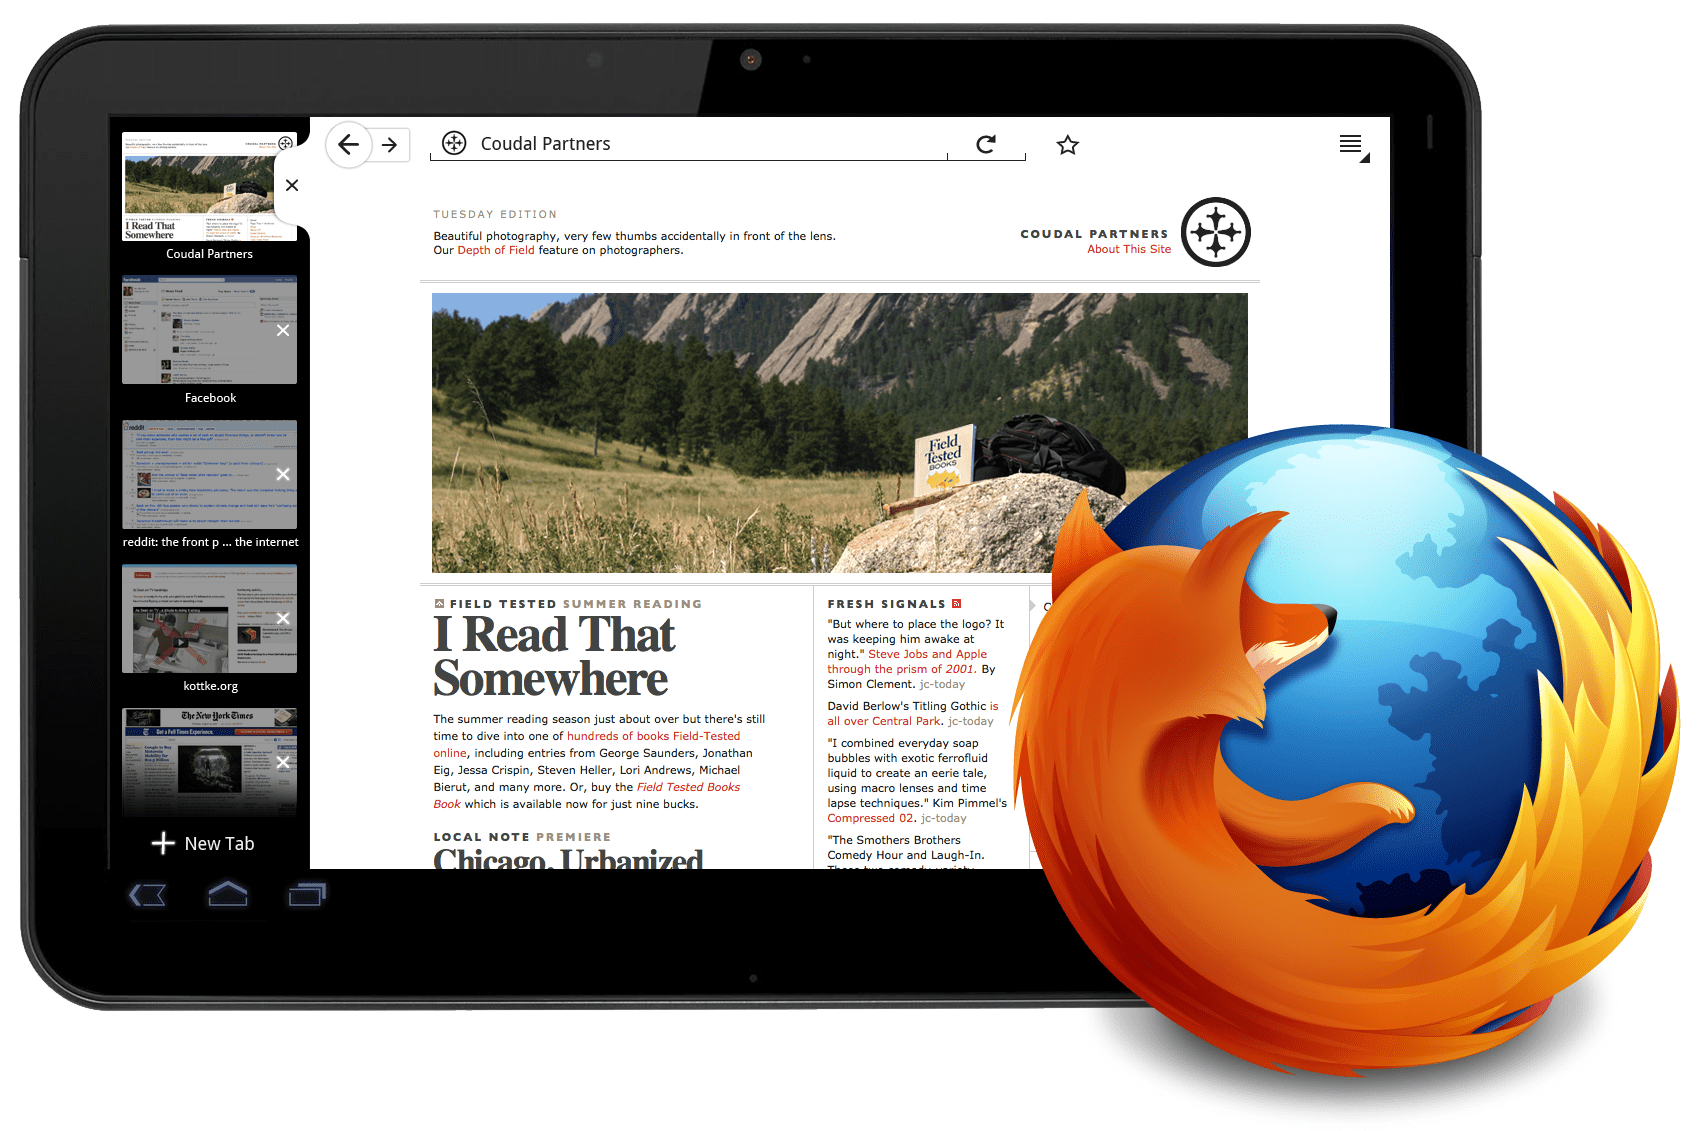 Firefox apk download uptodown